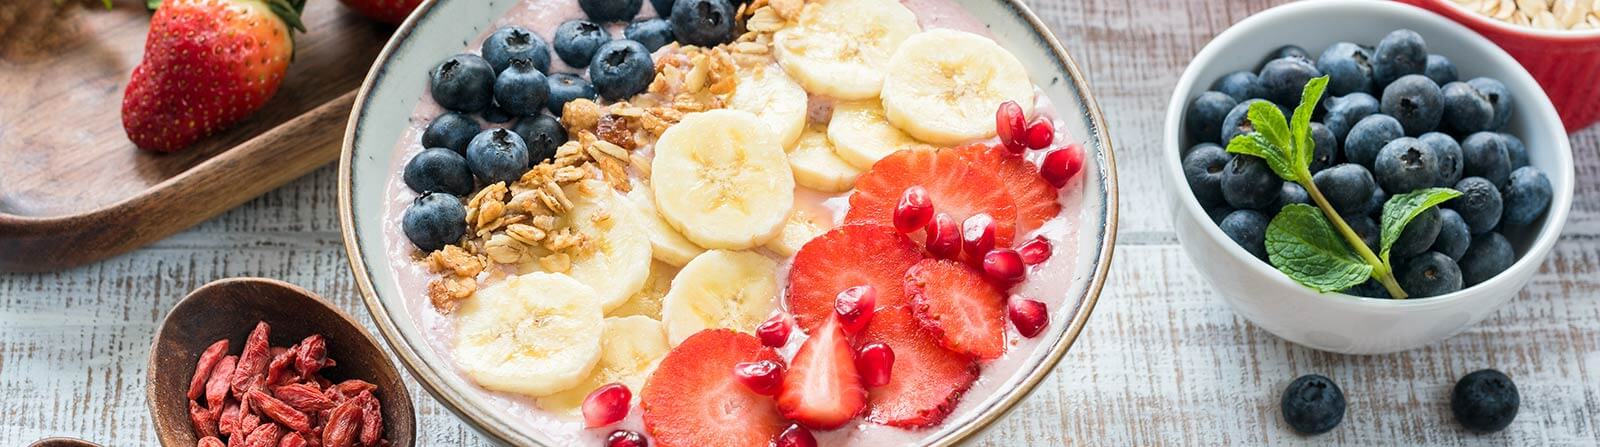 Healthy breakfast recipe from meal plans